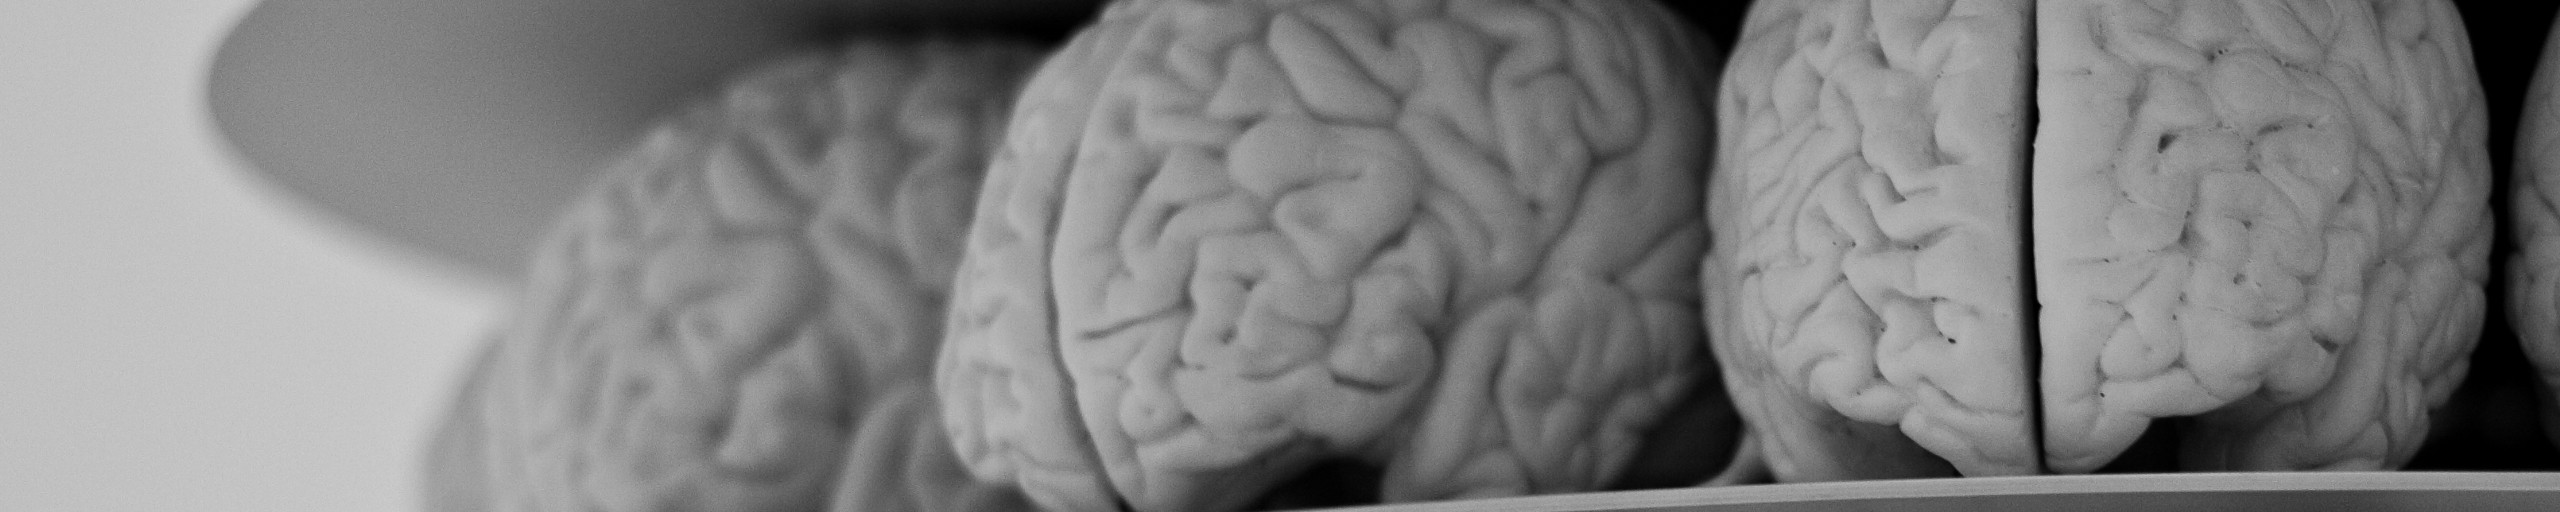 Models of brains.